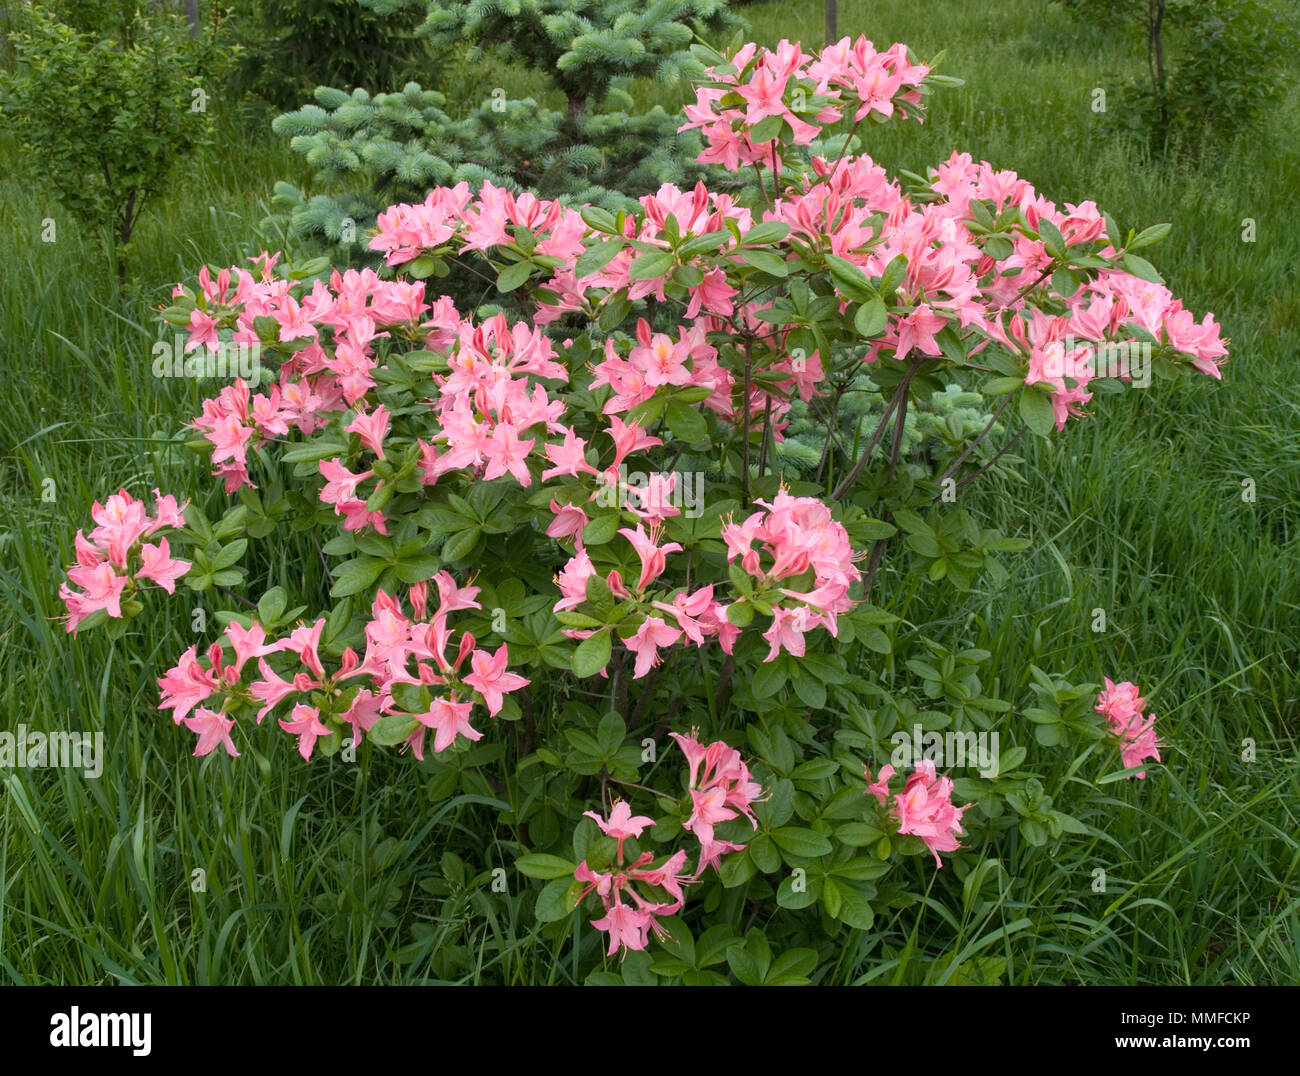 Flowering Rhododendron shrub Stock Photo